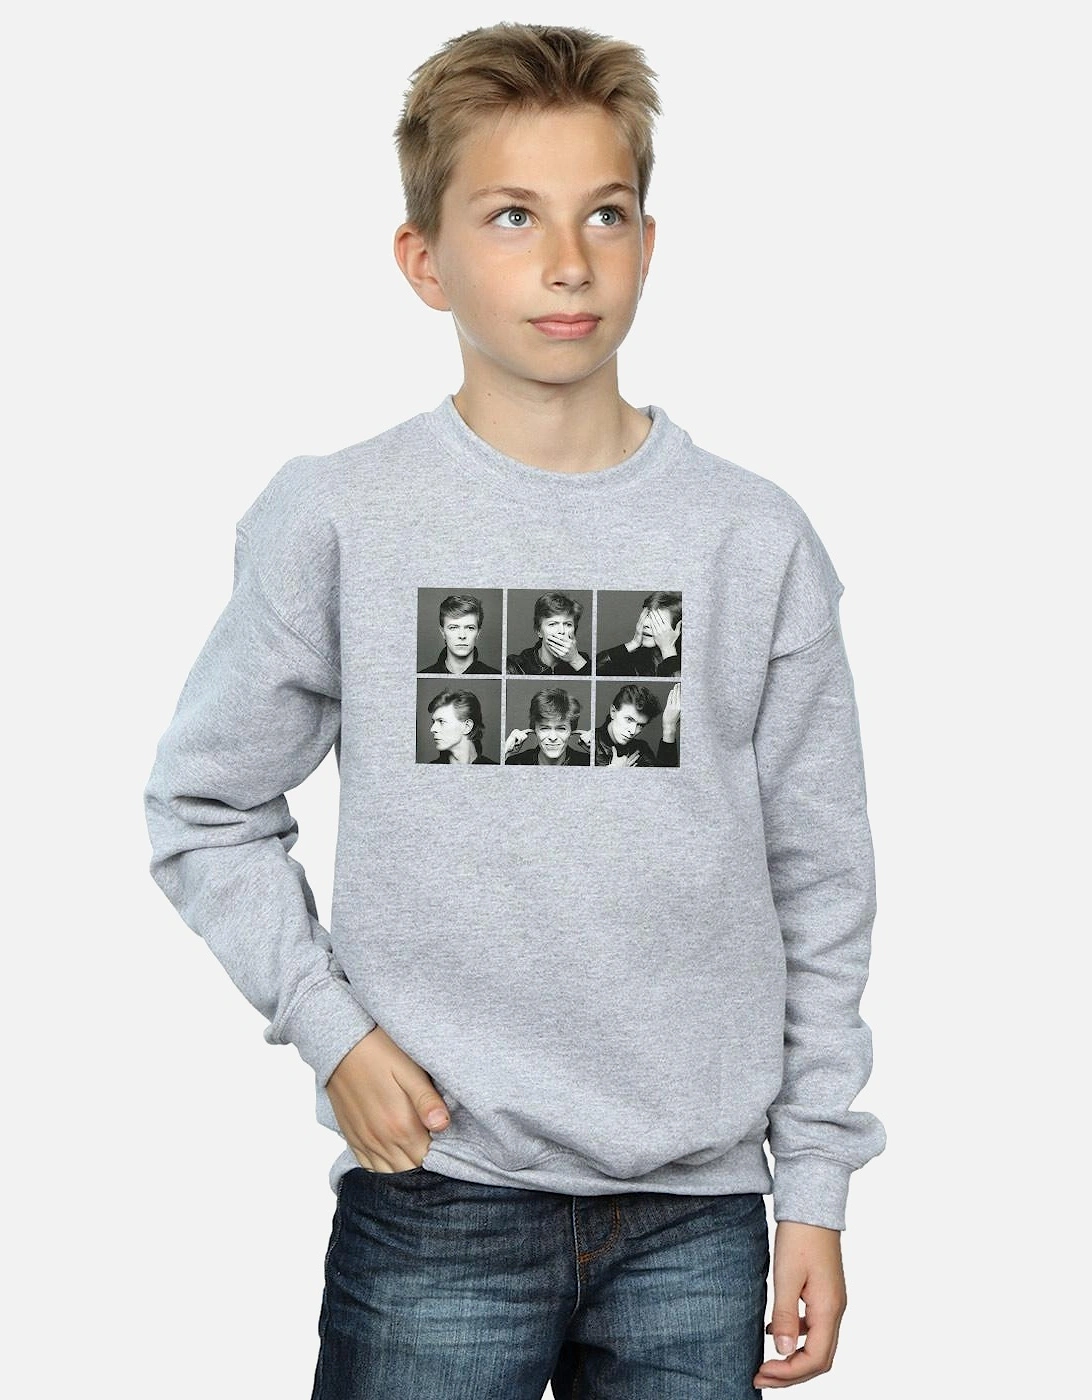 Boys Photo Collage Sweatshirt